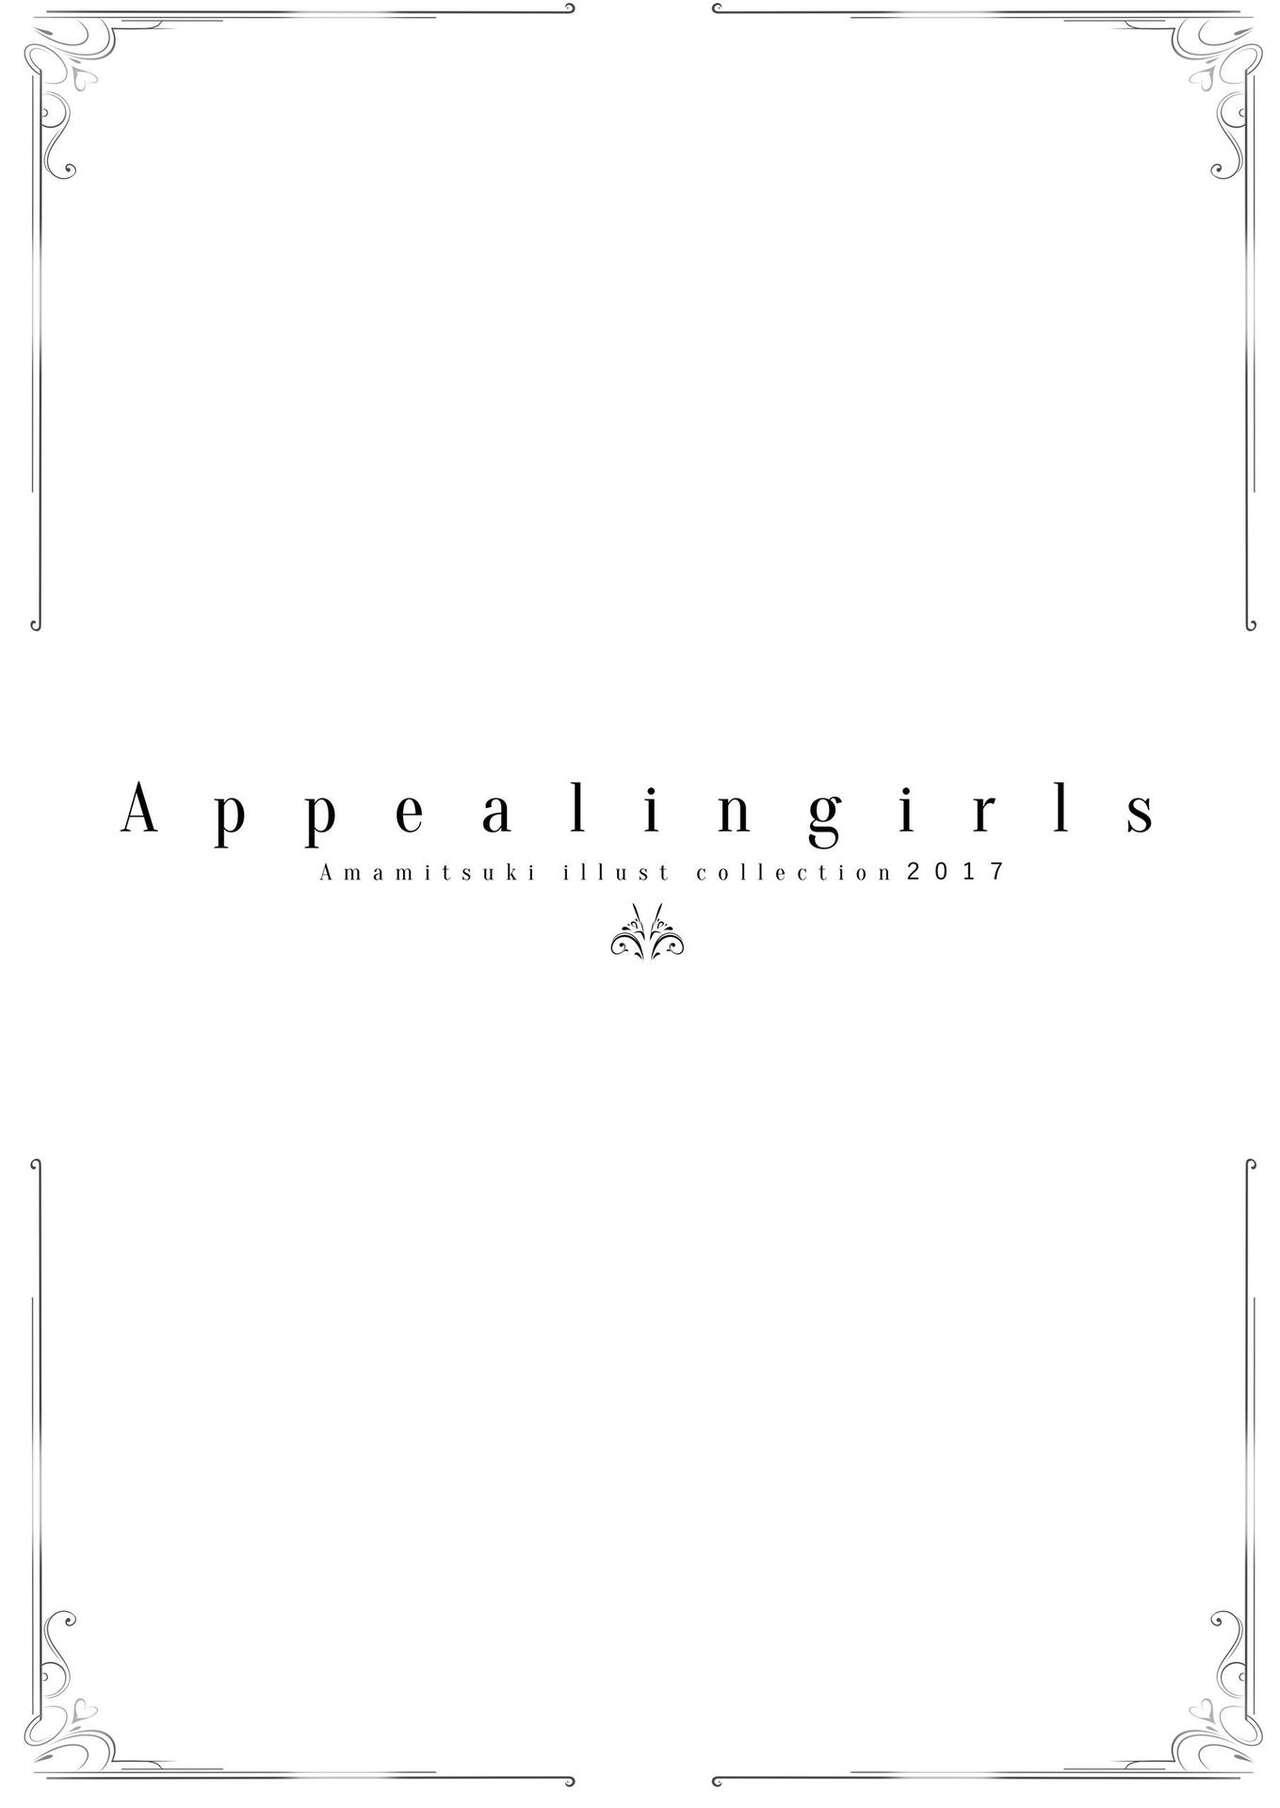 Appealingirls01 54